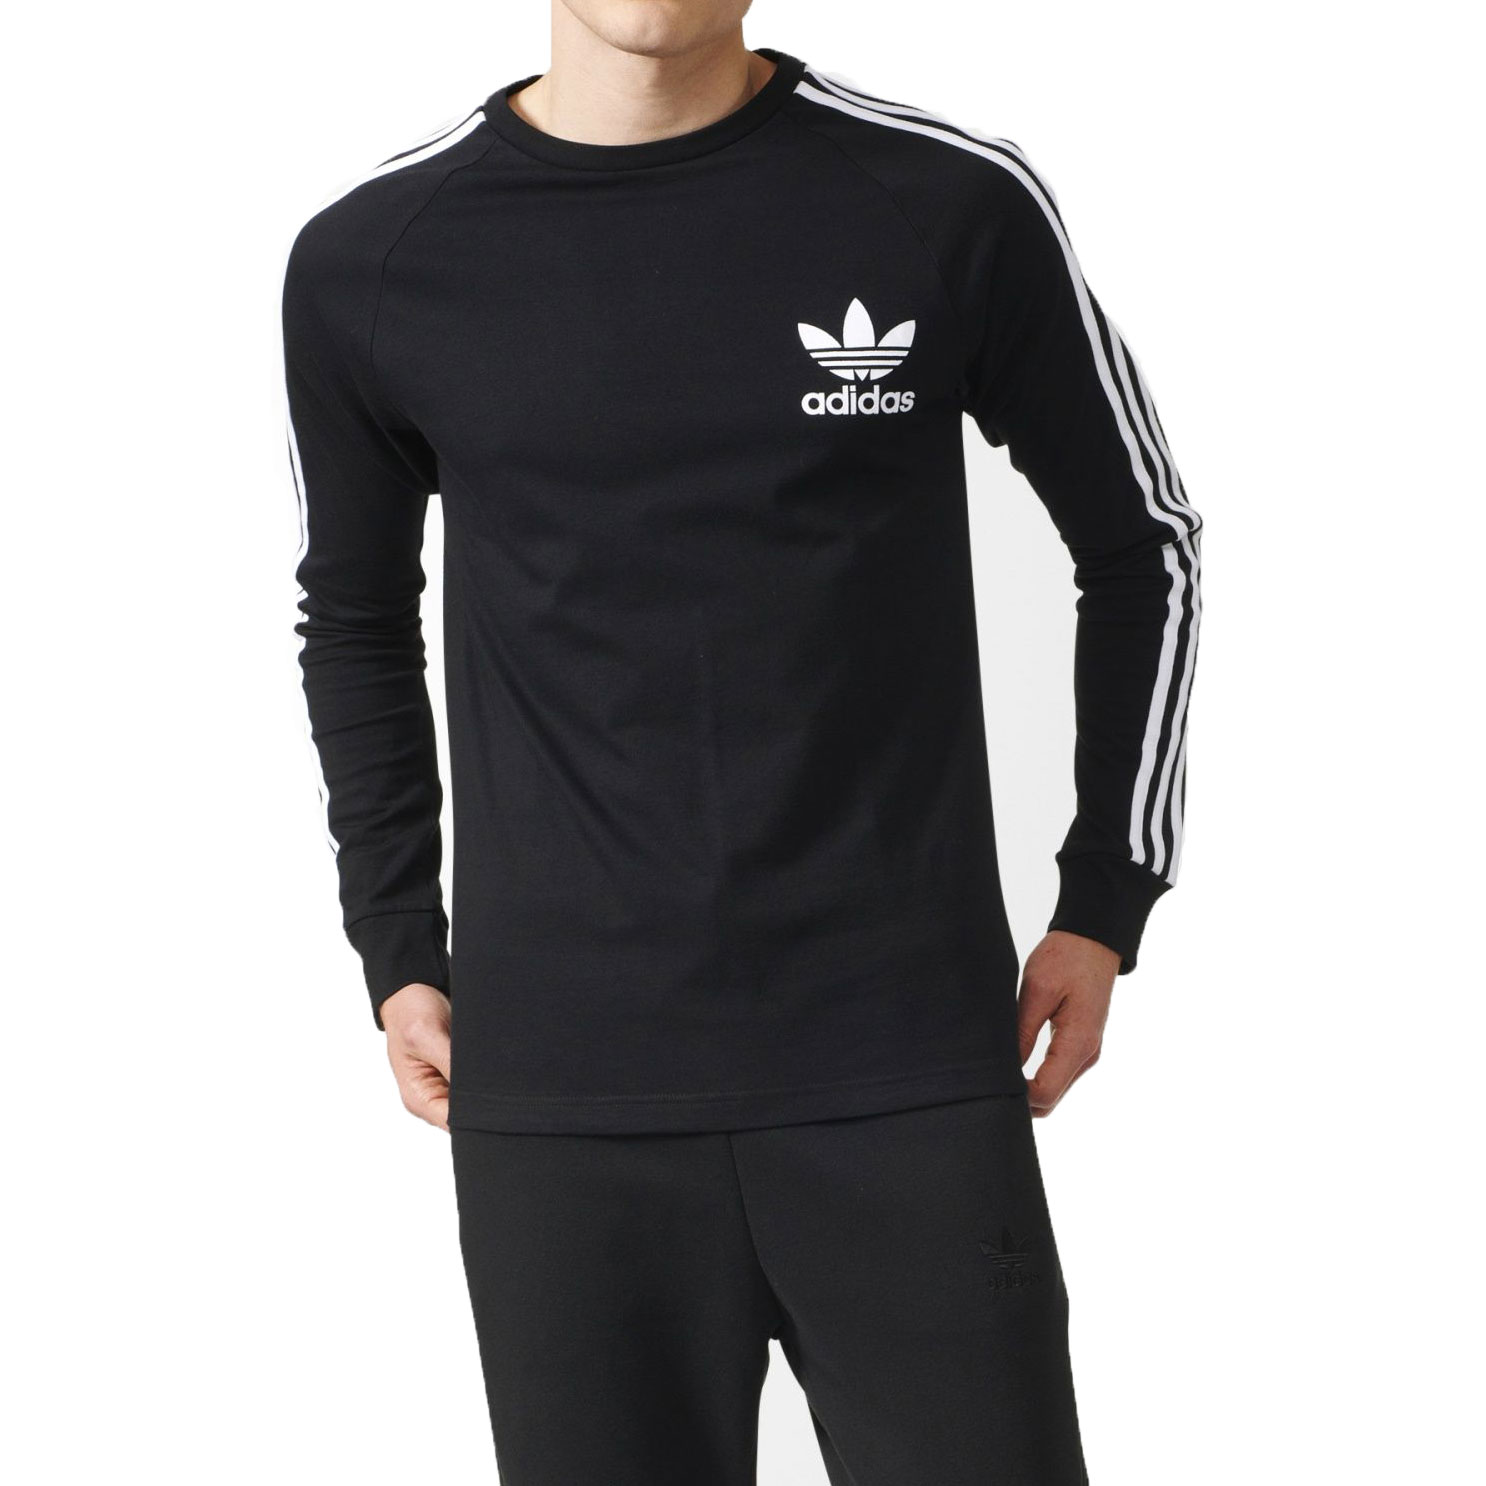 Adidas Originals California Longsleeve Men's Black-White eBay